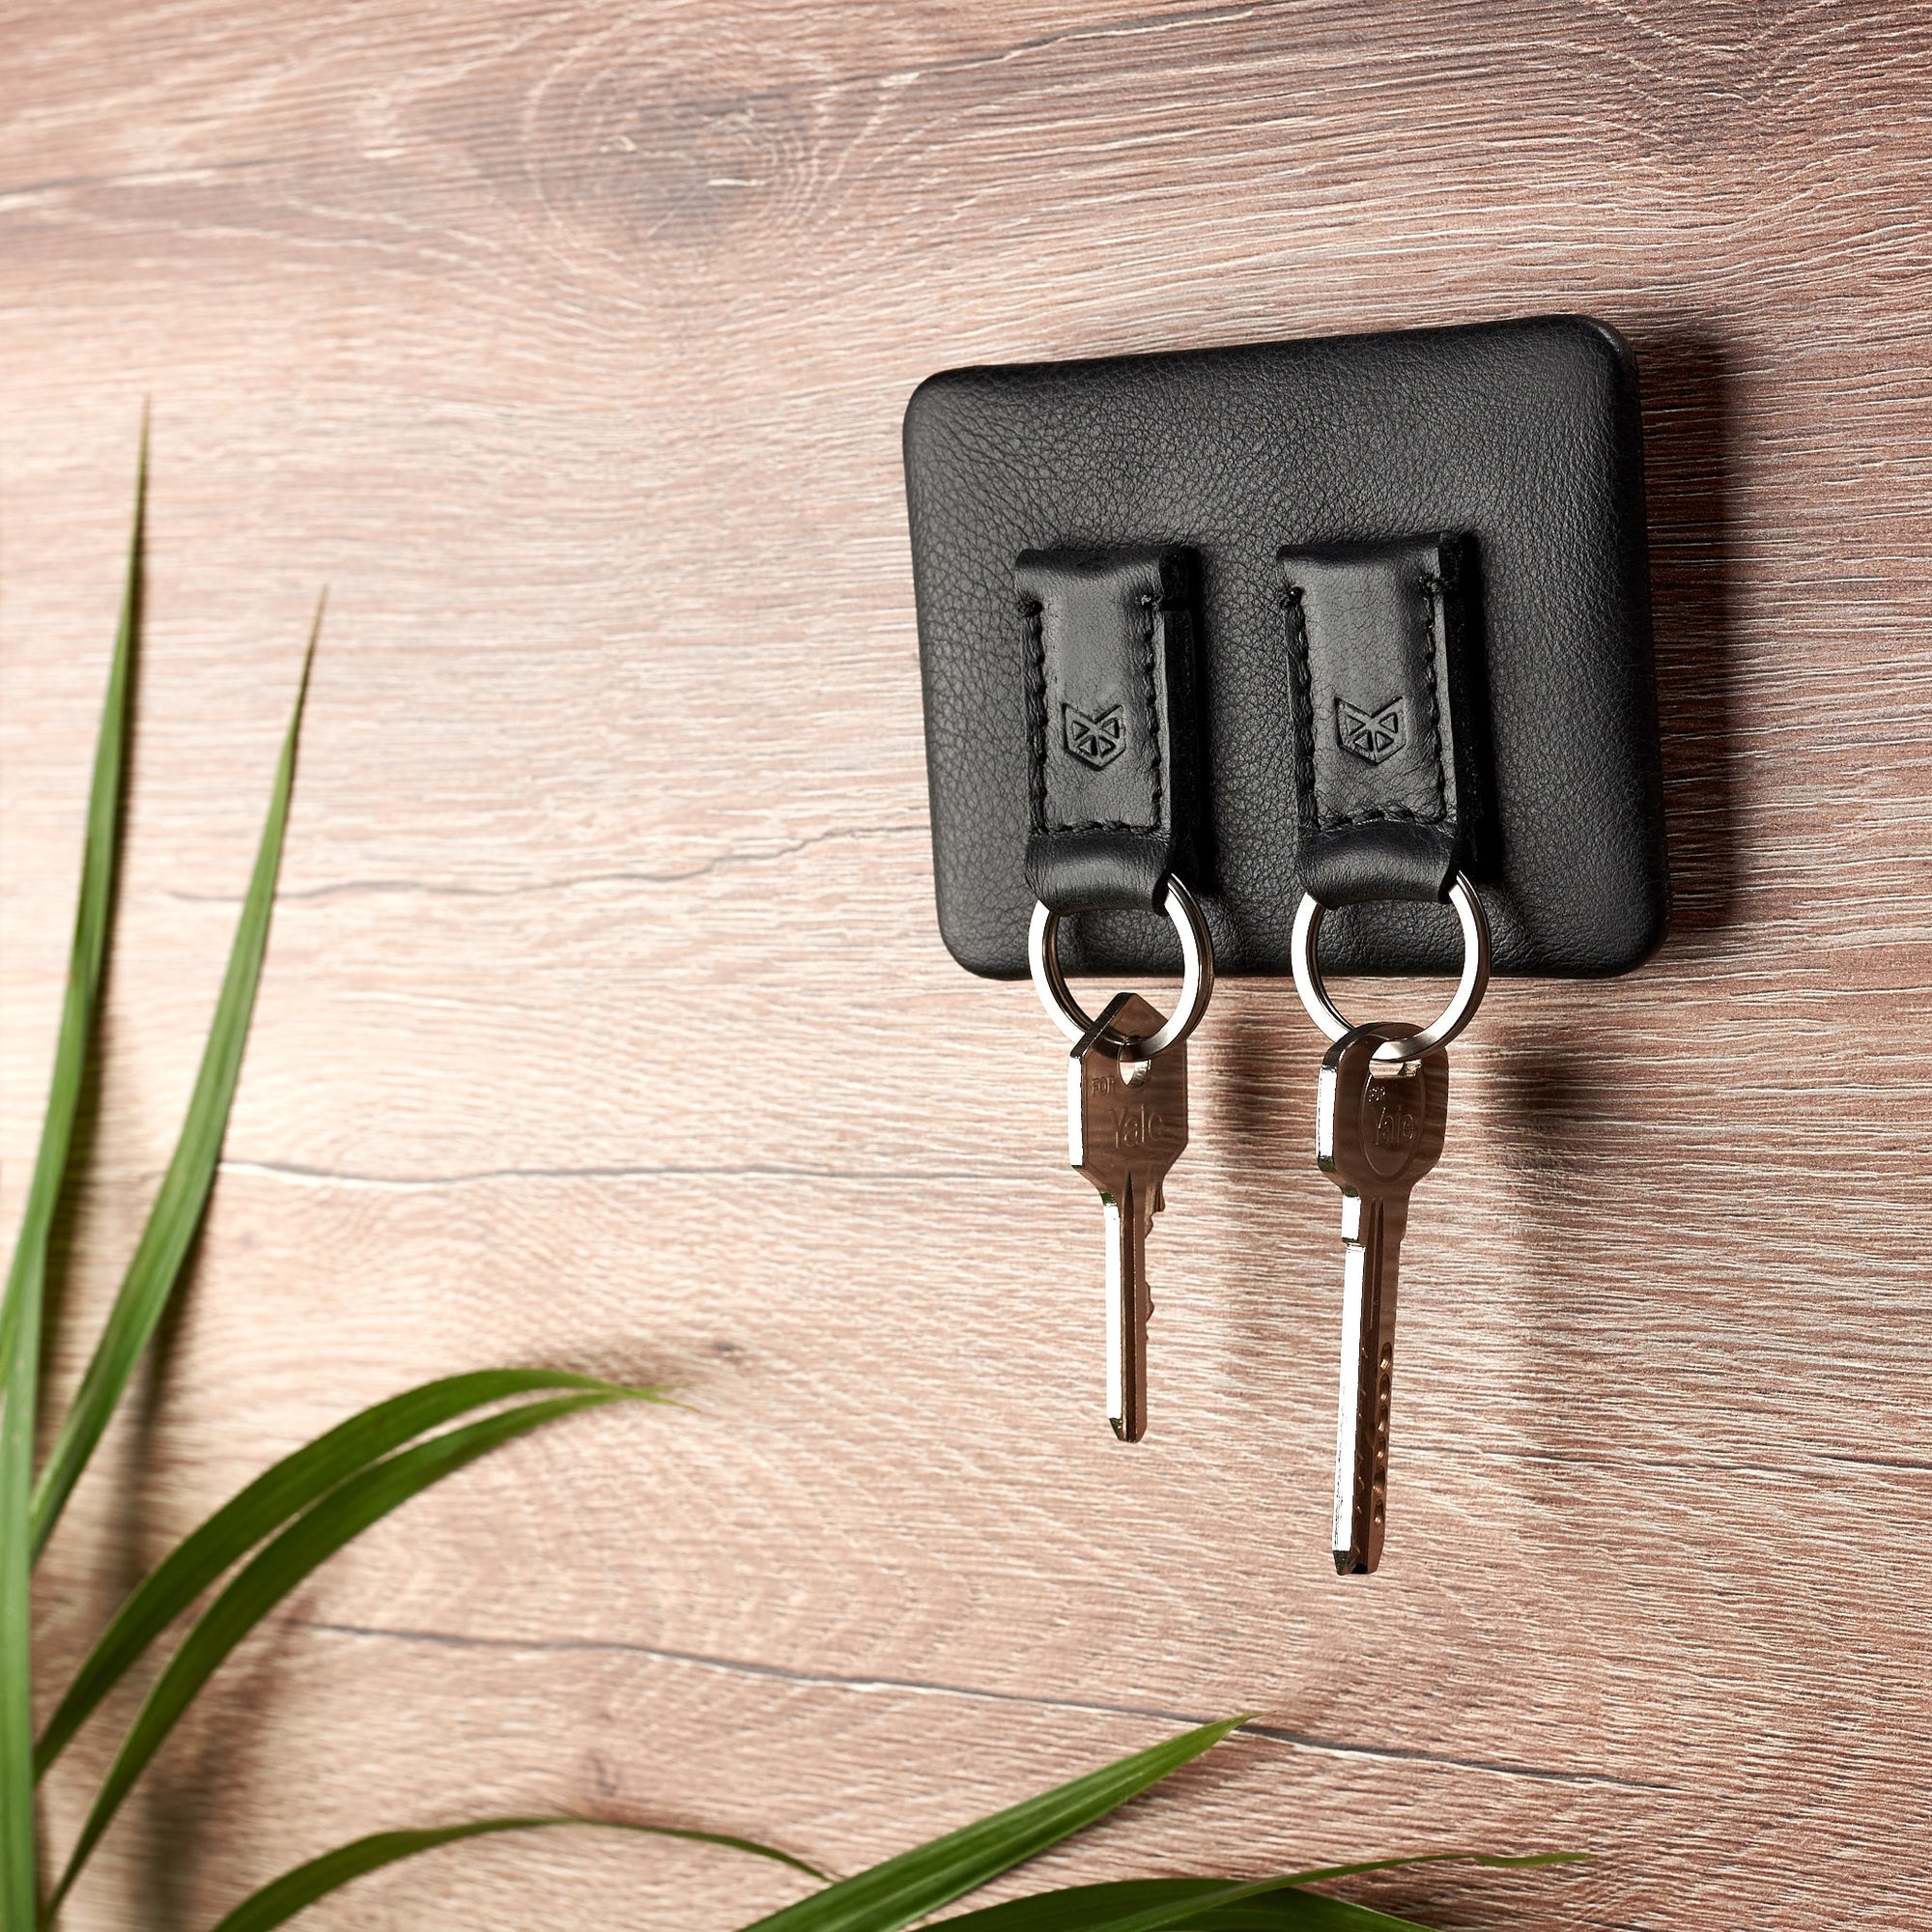  Magnetic key hanger organizer. Black leather magnetic key holder